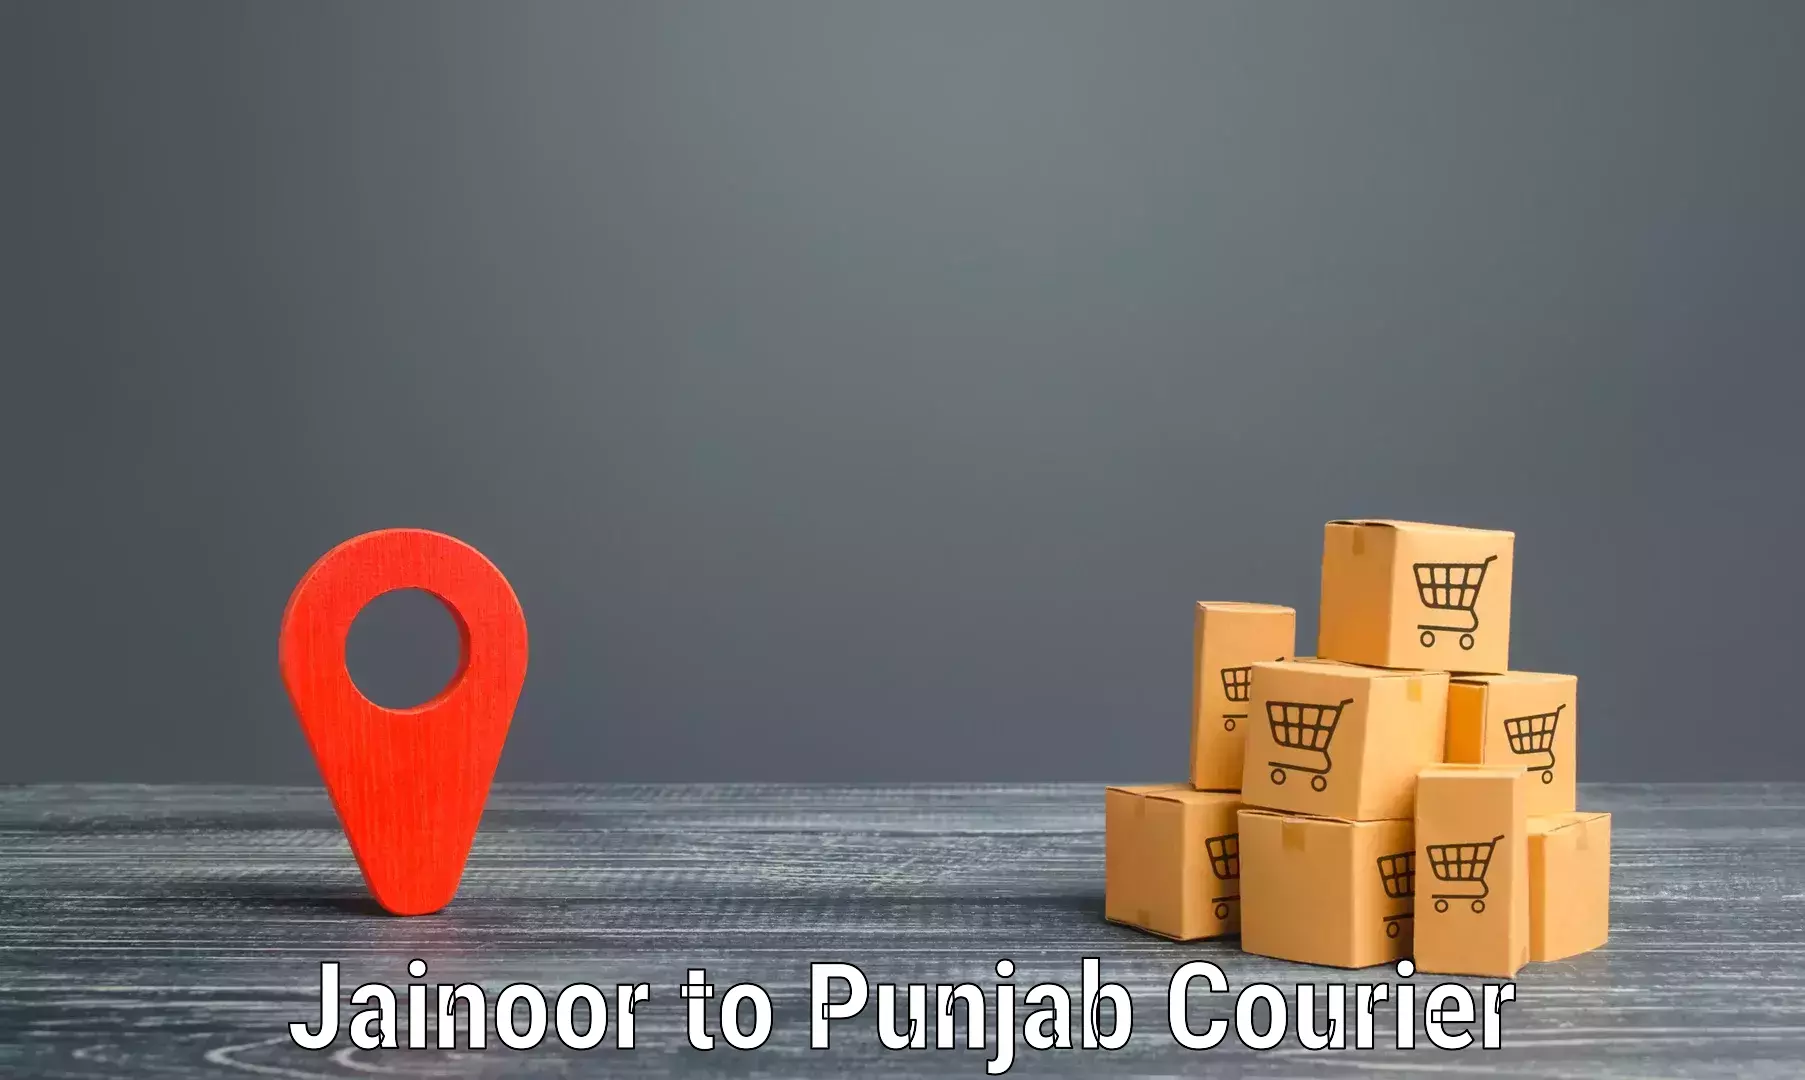 On-call courier service Jainoor to Sangrur